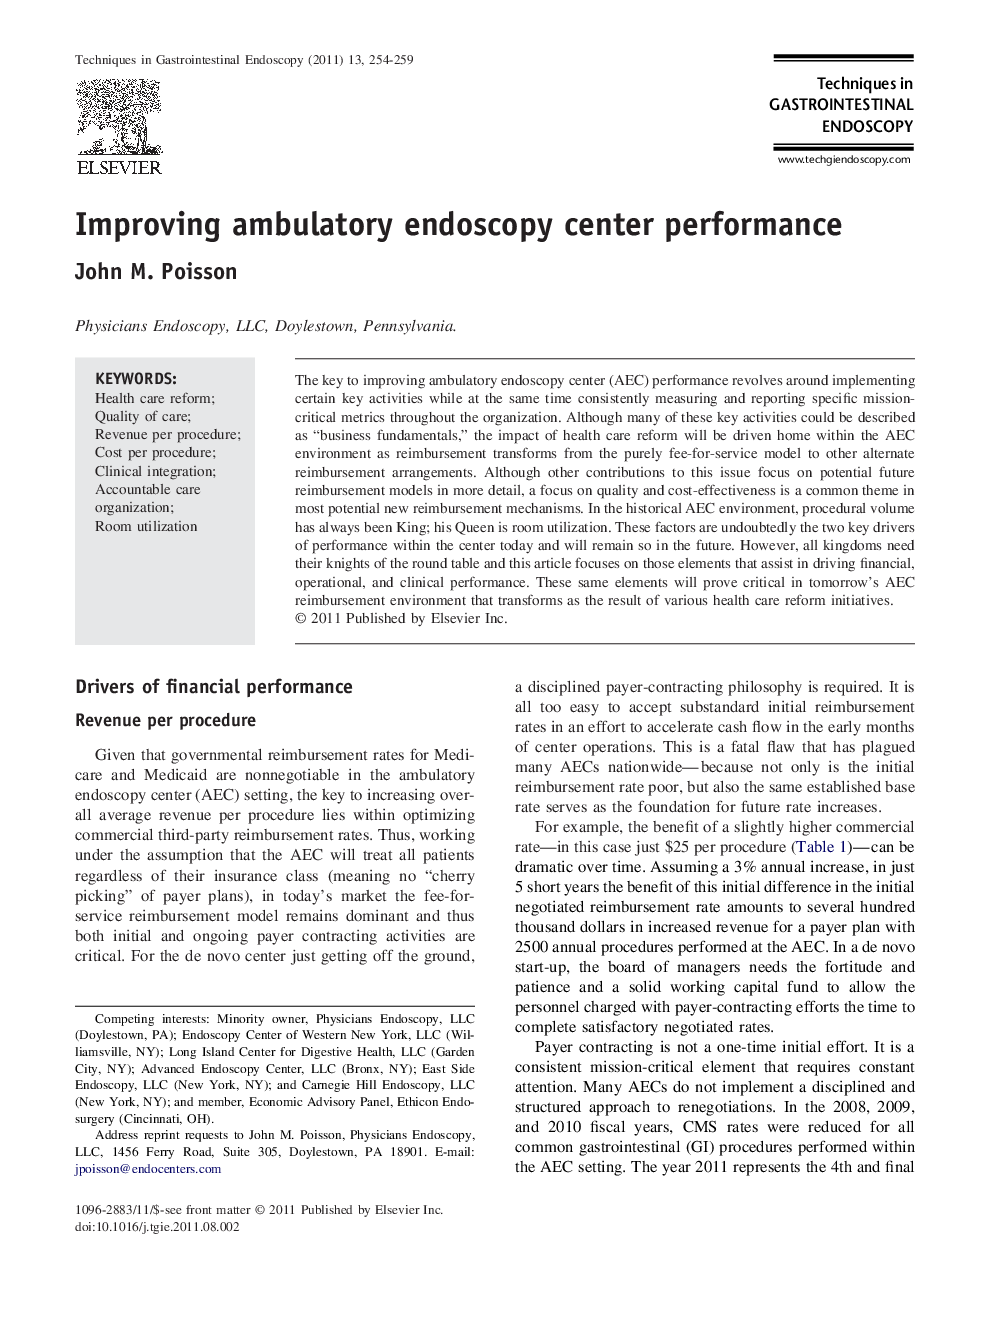 Improving ambulatory endoscopy center performance